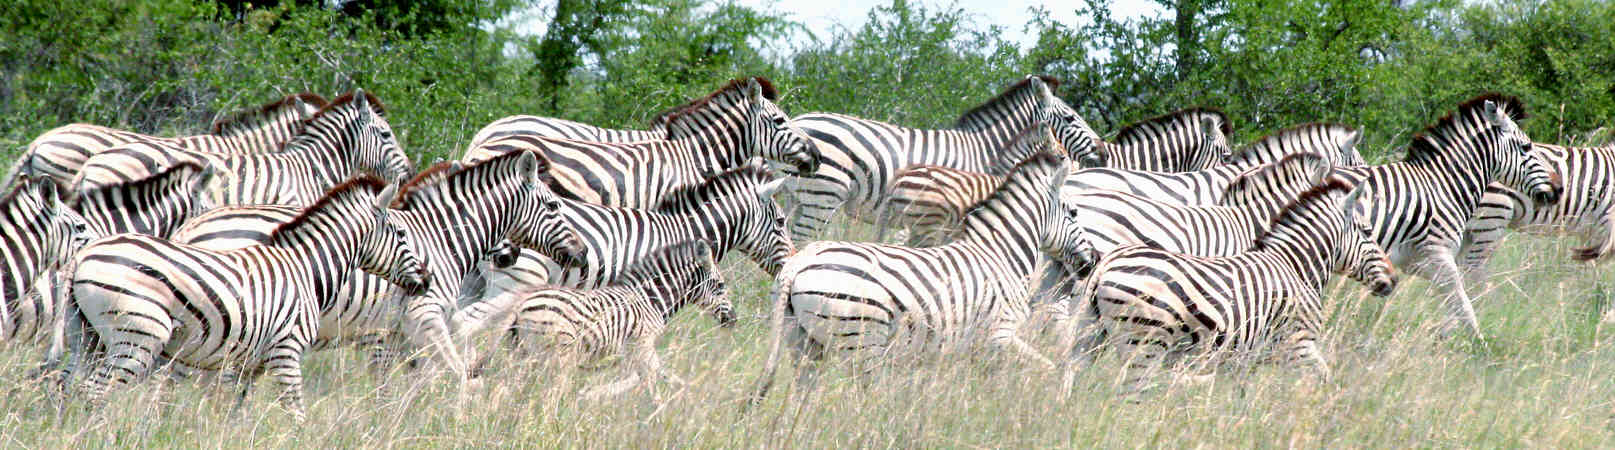 zebra herd running